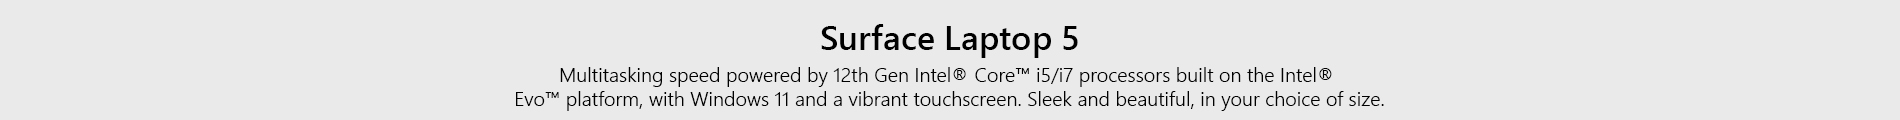 Microsoft Surface Header Landing Page  Tile 02